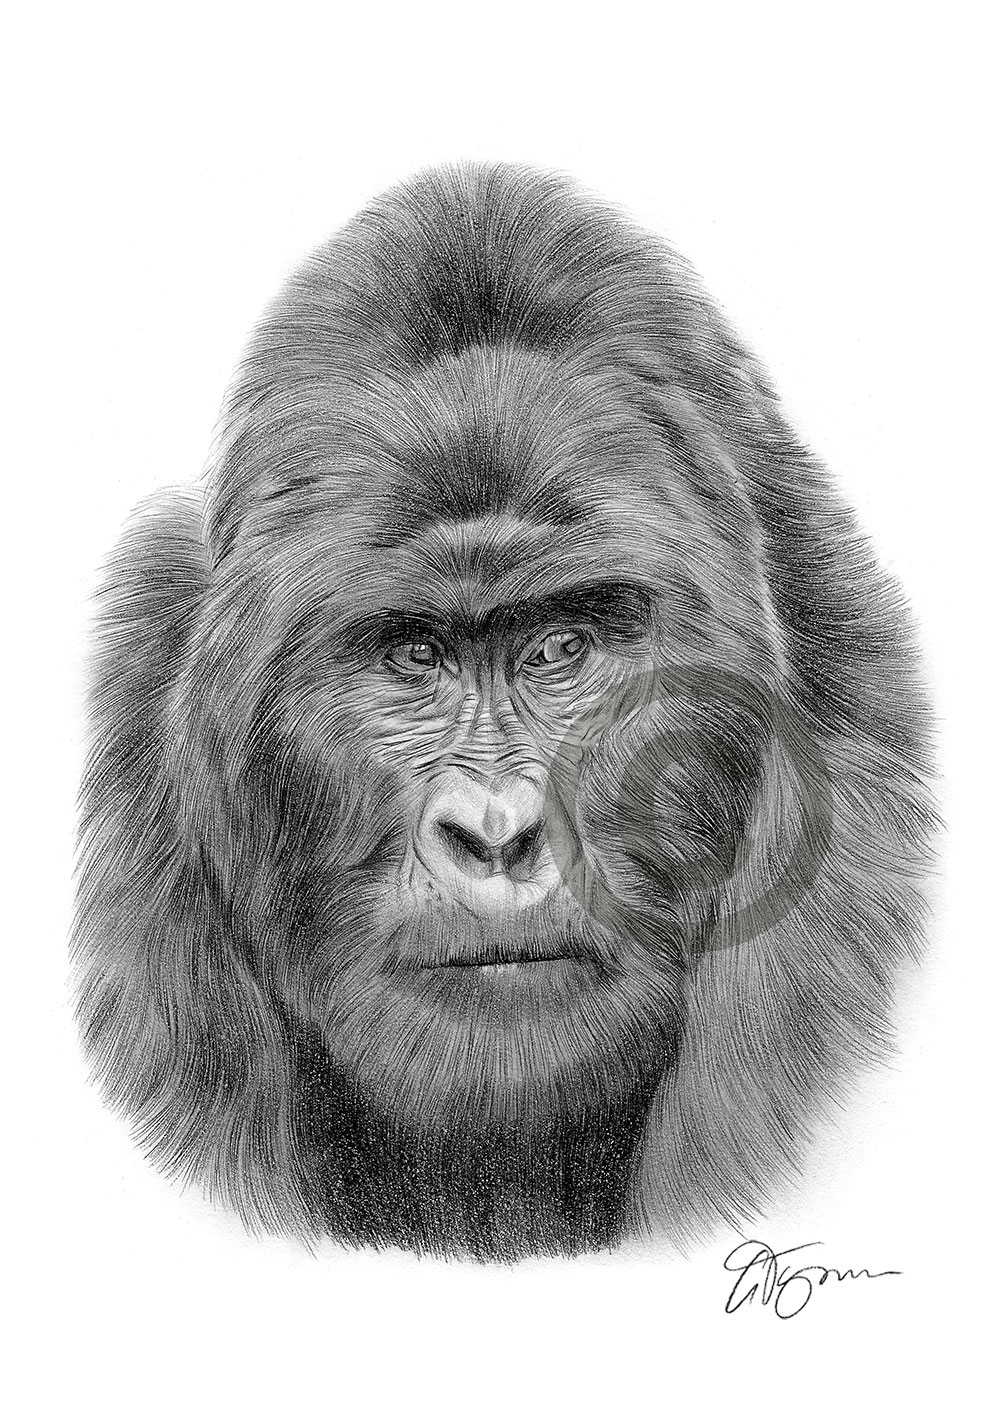 Pencil drawing of a mountain gorilla by UK artist Gary Tymon